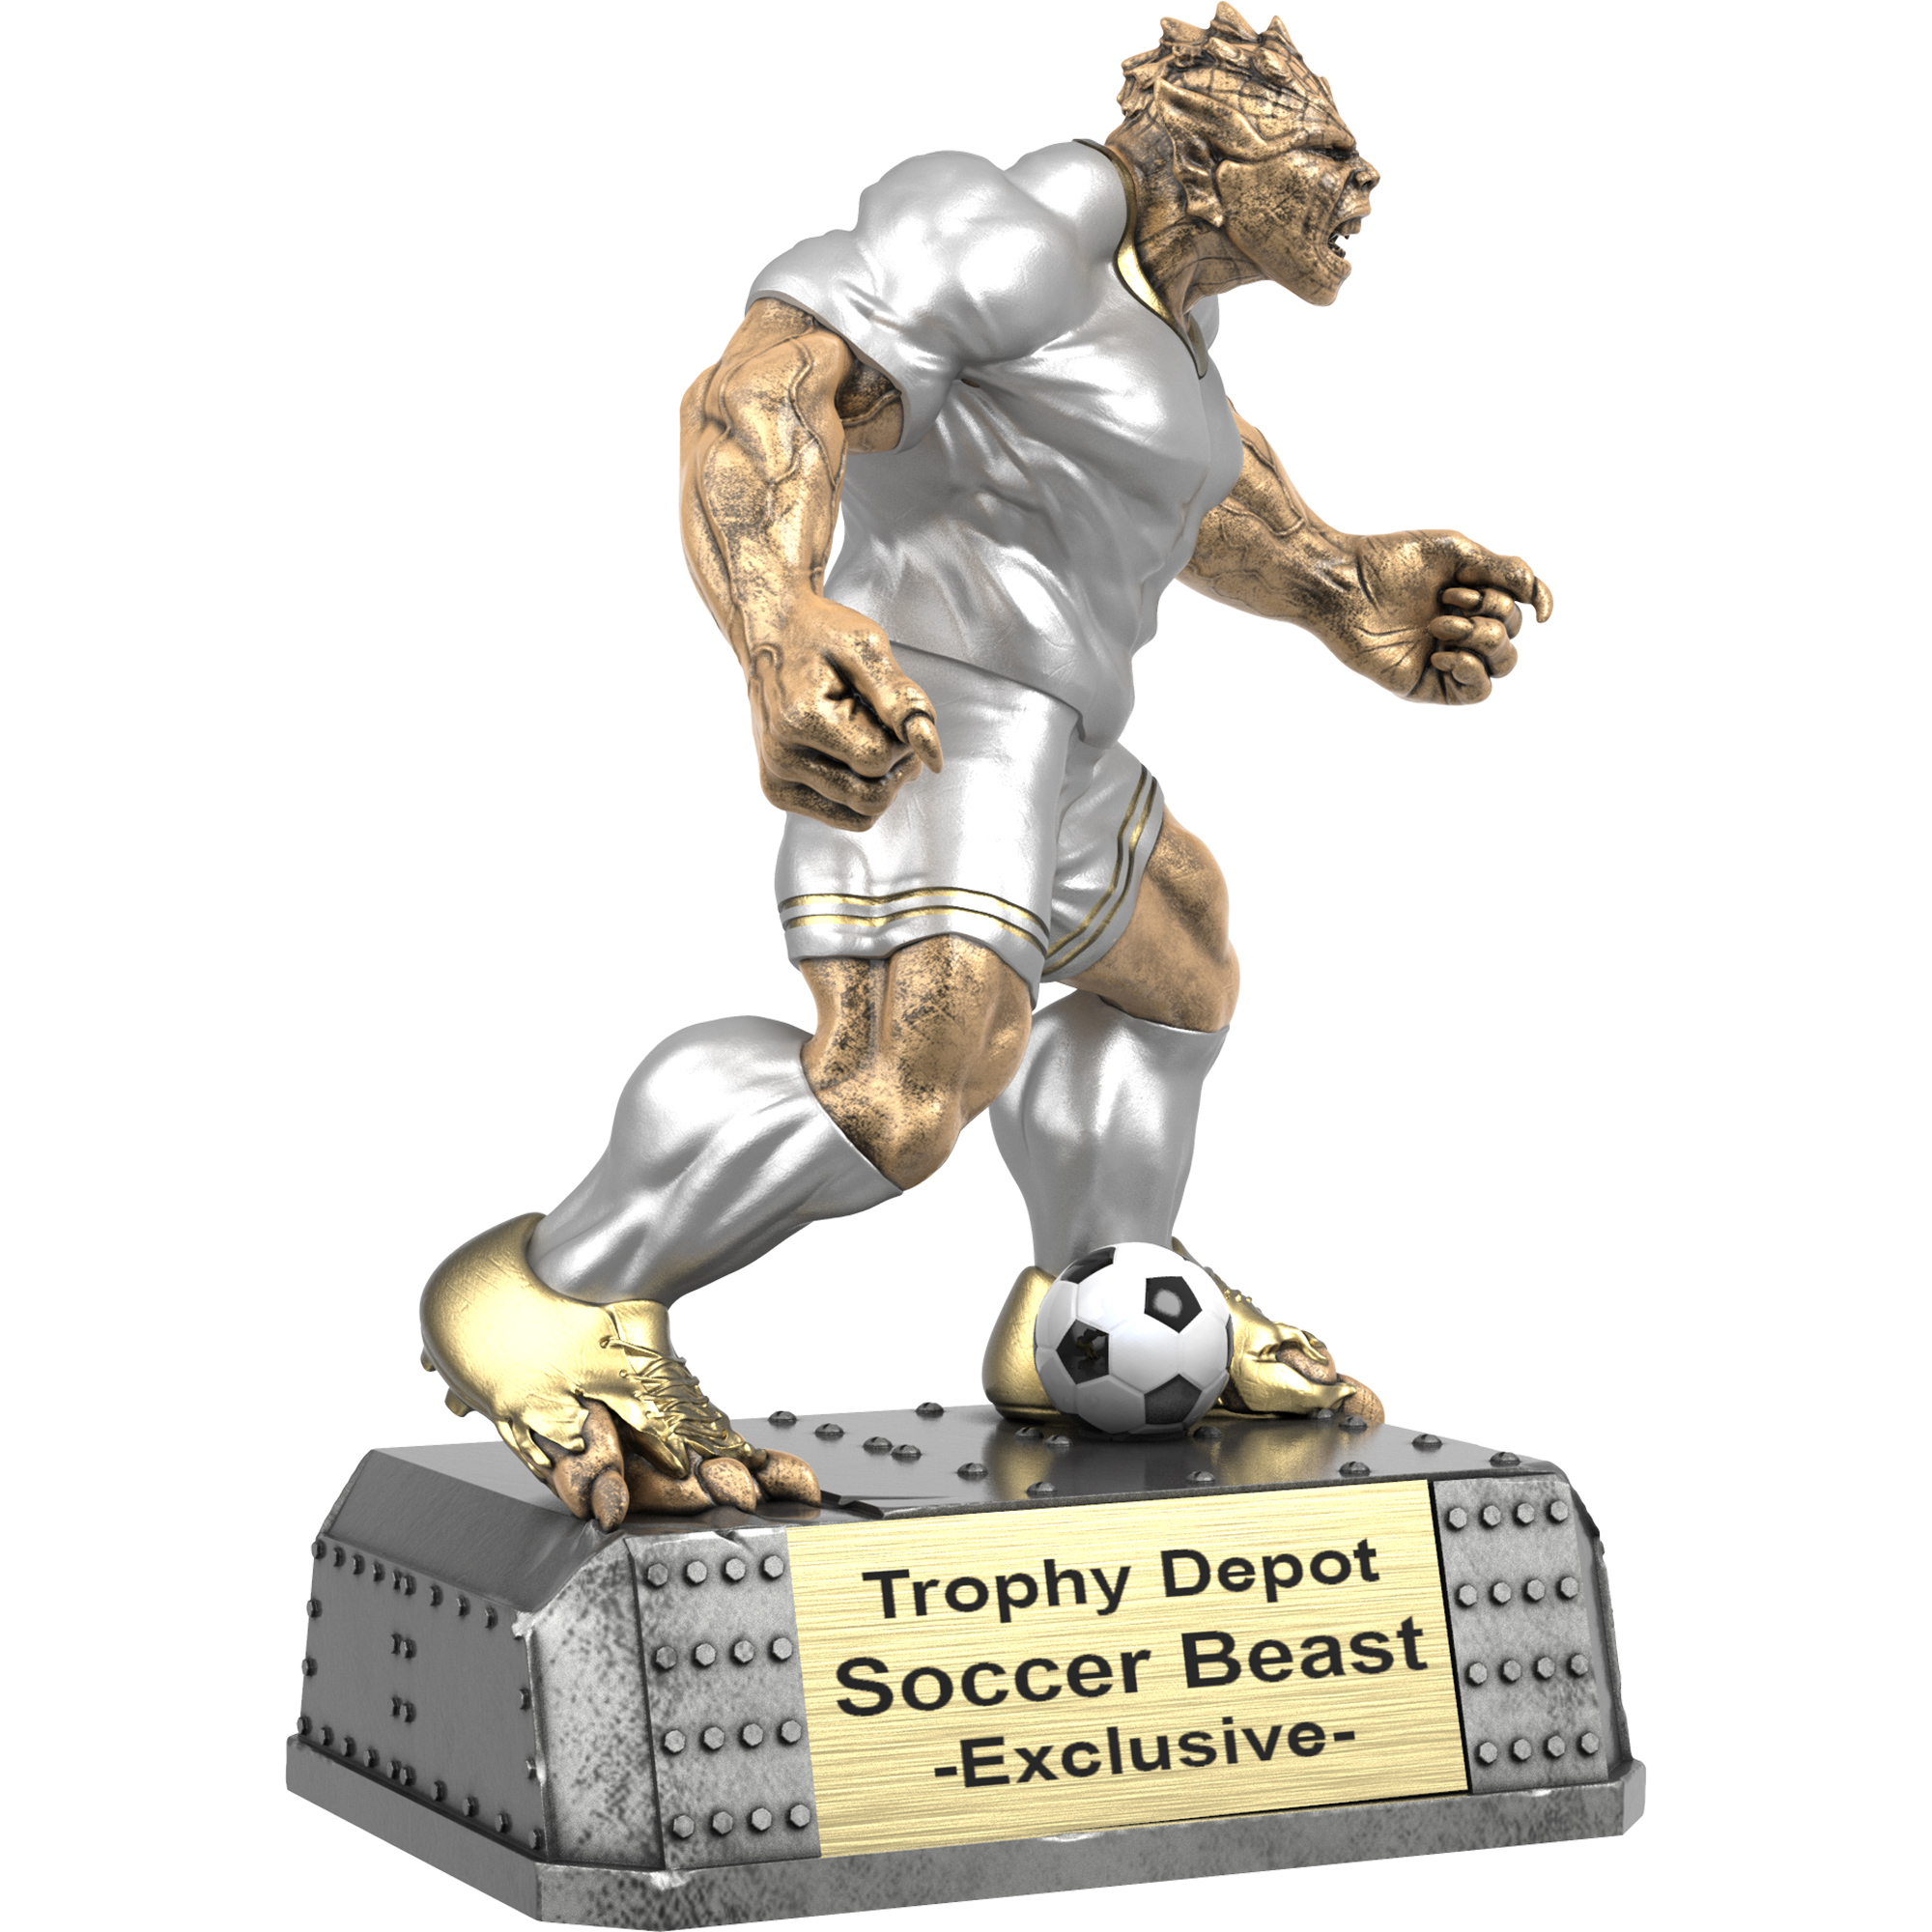 Soccer Beast, Monster Sculpture Trophy - 6.75 inch